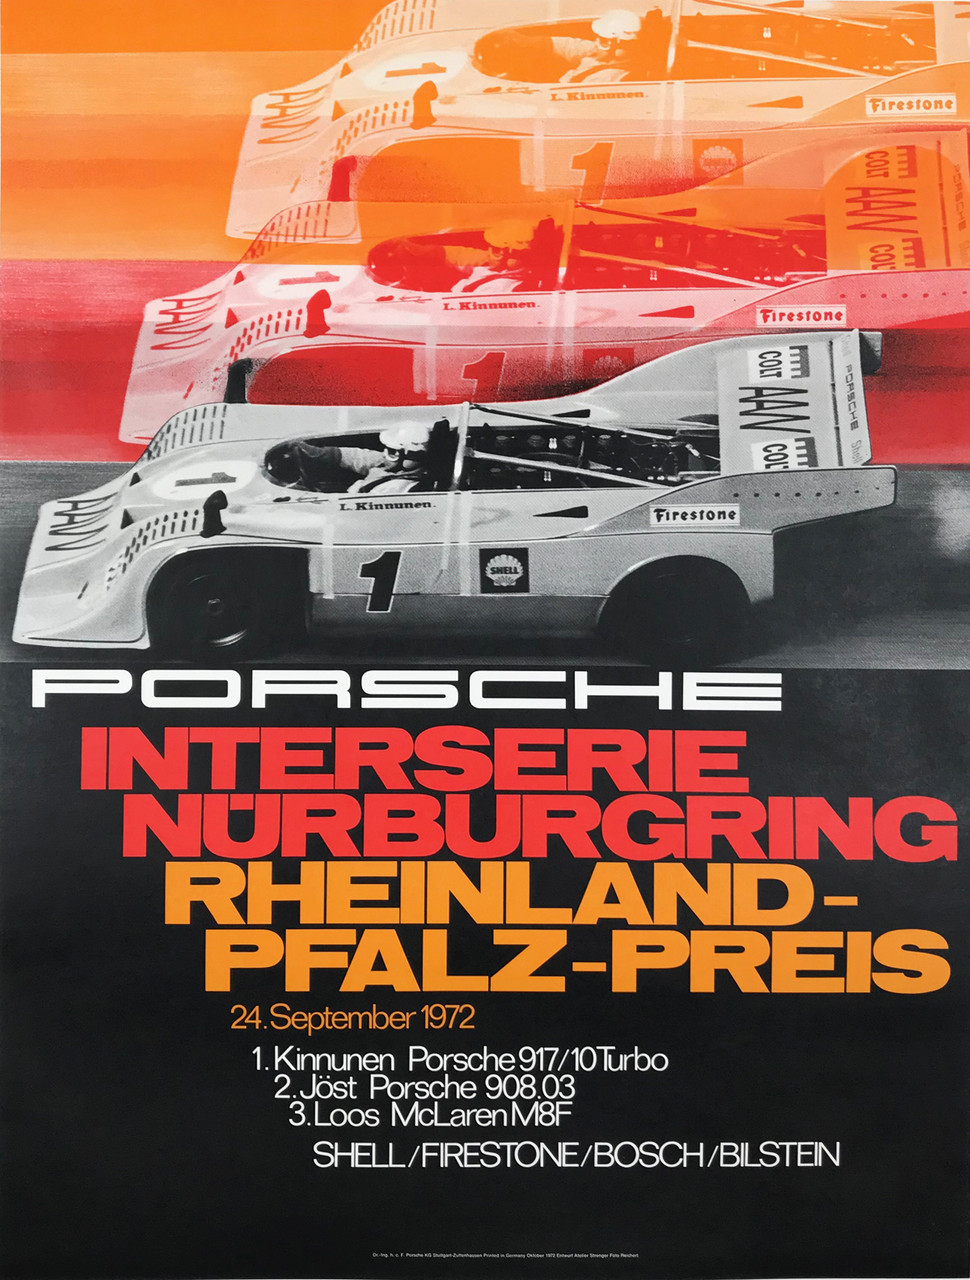 Porsche Interserie Nurburgring Rheinland Pfalz Preis Photo by Reichert Original 1972 Vintage German Strenger Printing Car Racing Promotional Advertisement Lithograph Poster Linen Backed. 